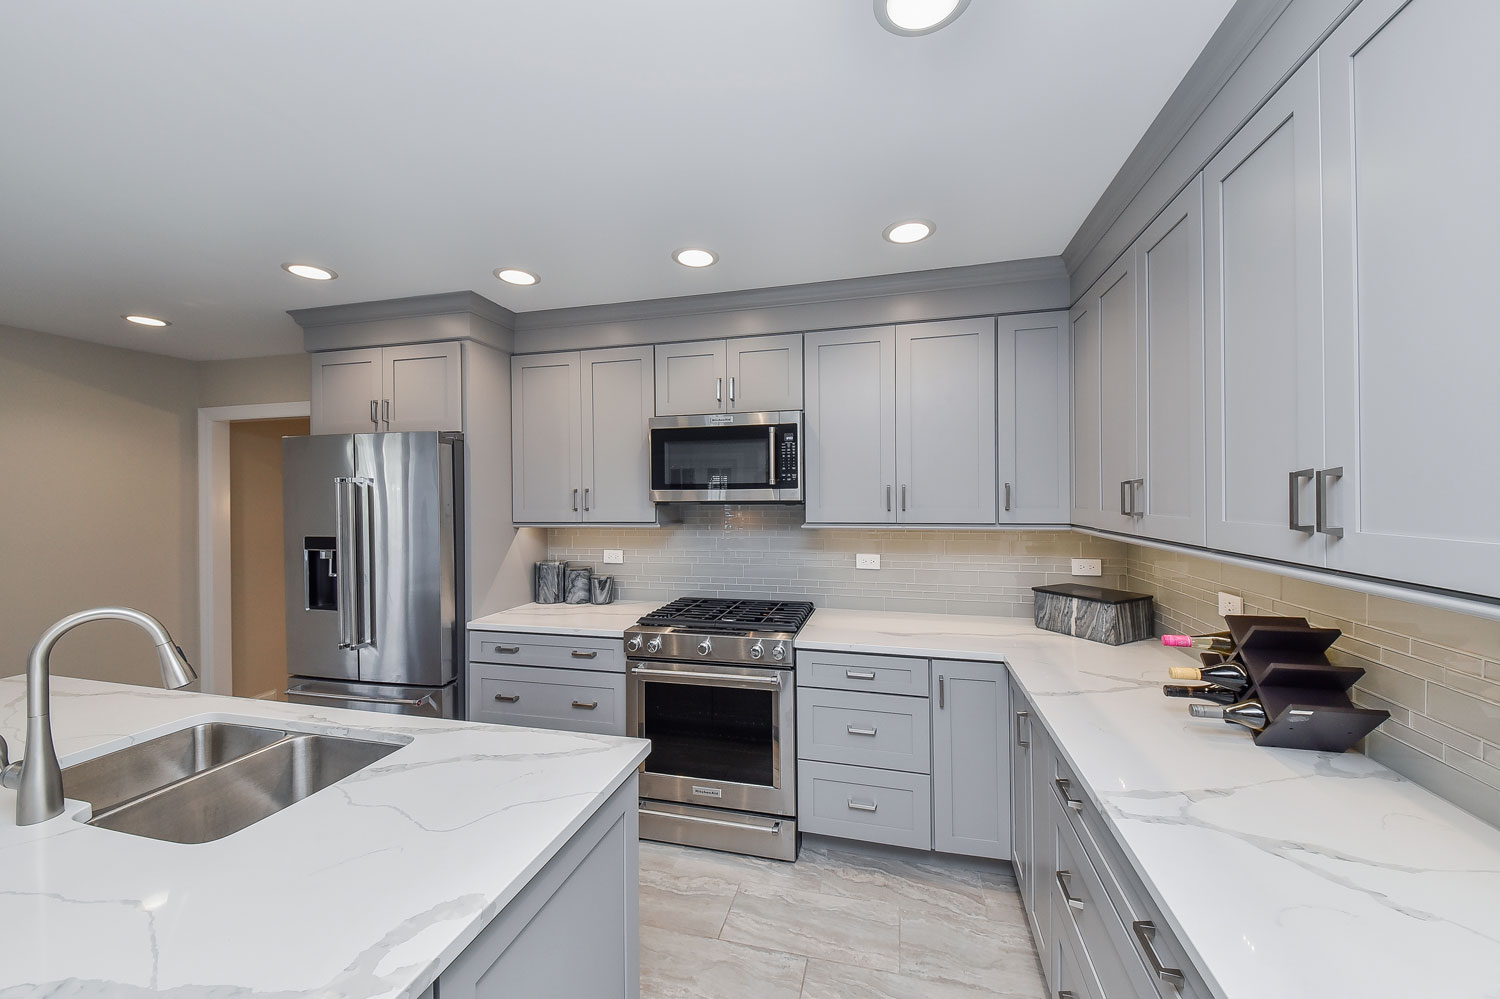 Downers Grove Kitchen Remodeling Project - Sebring Design Build